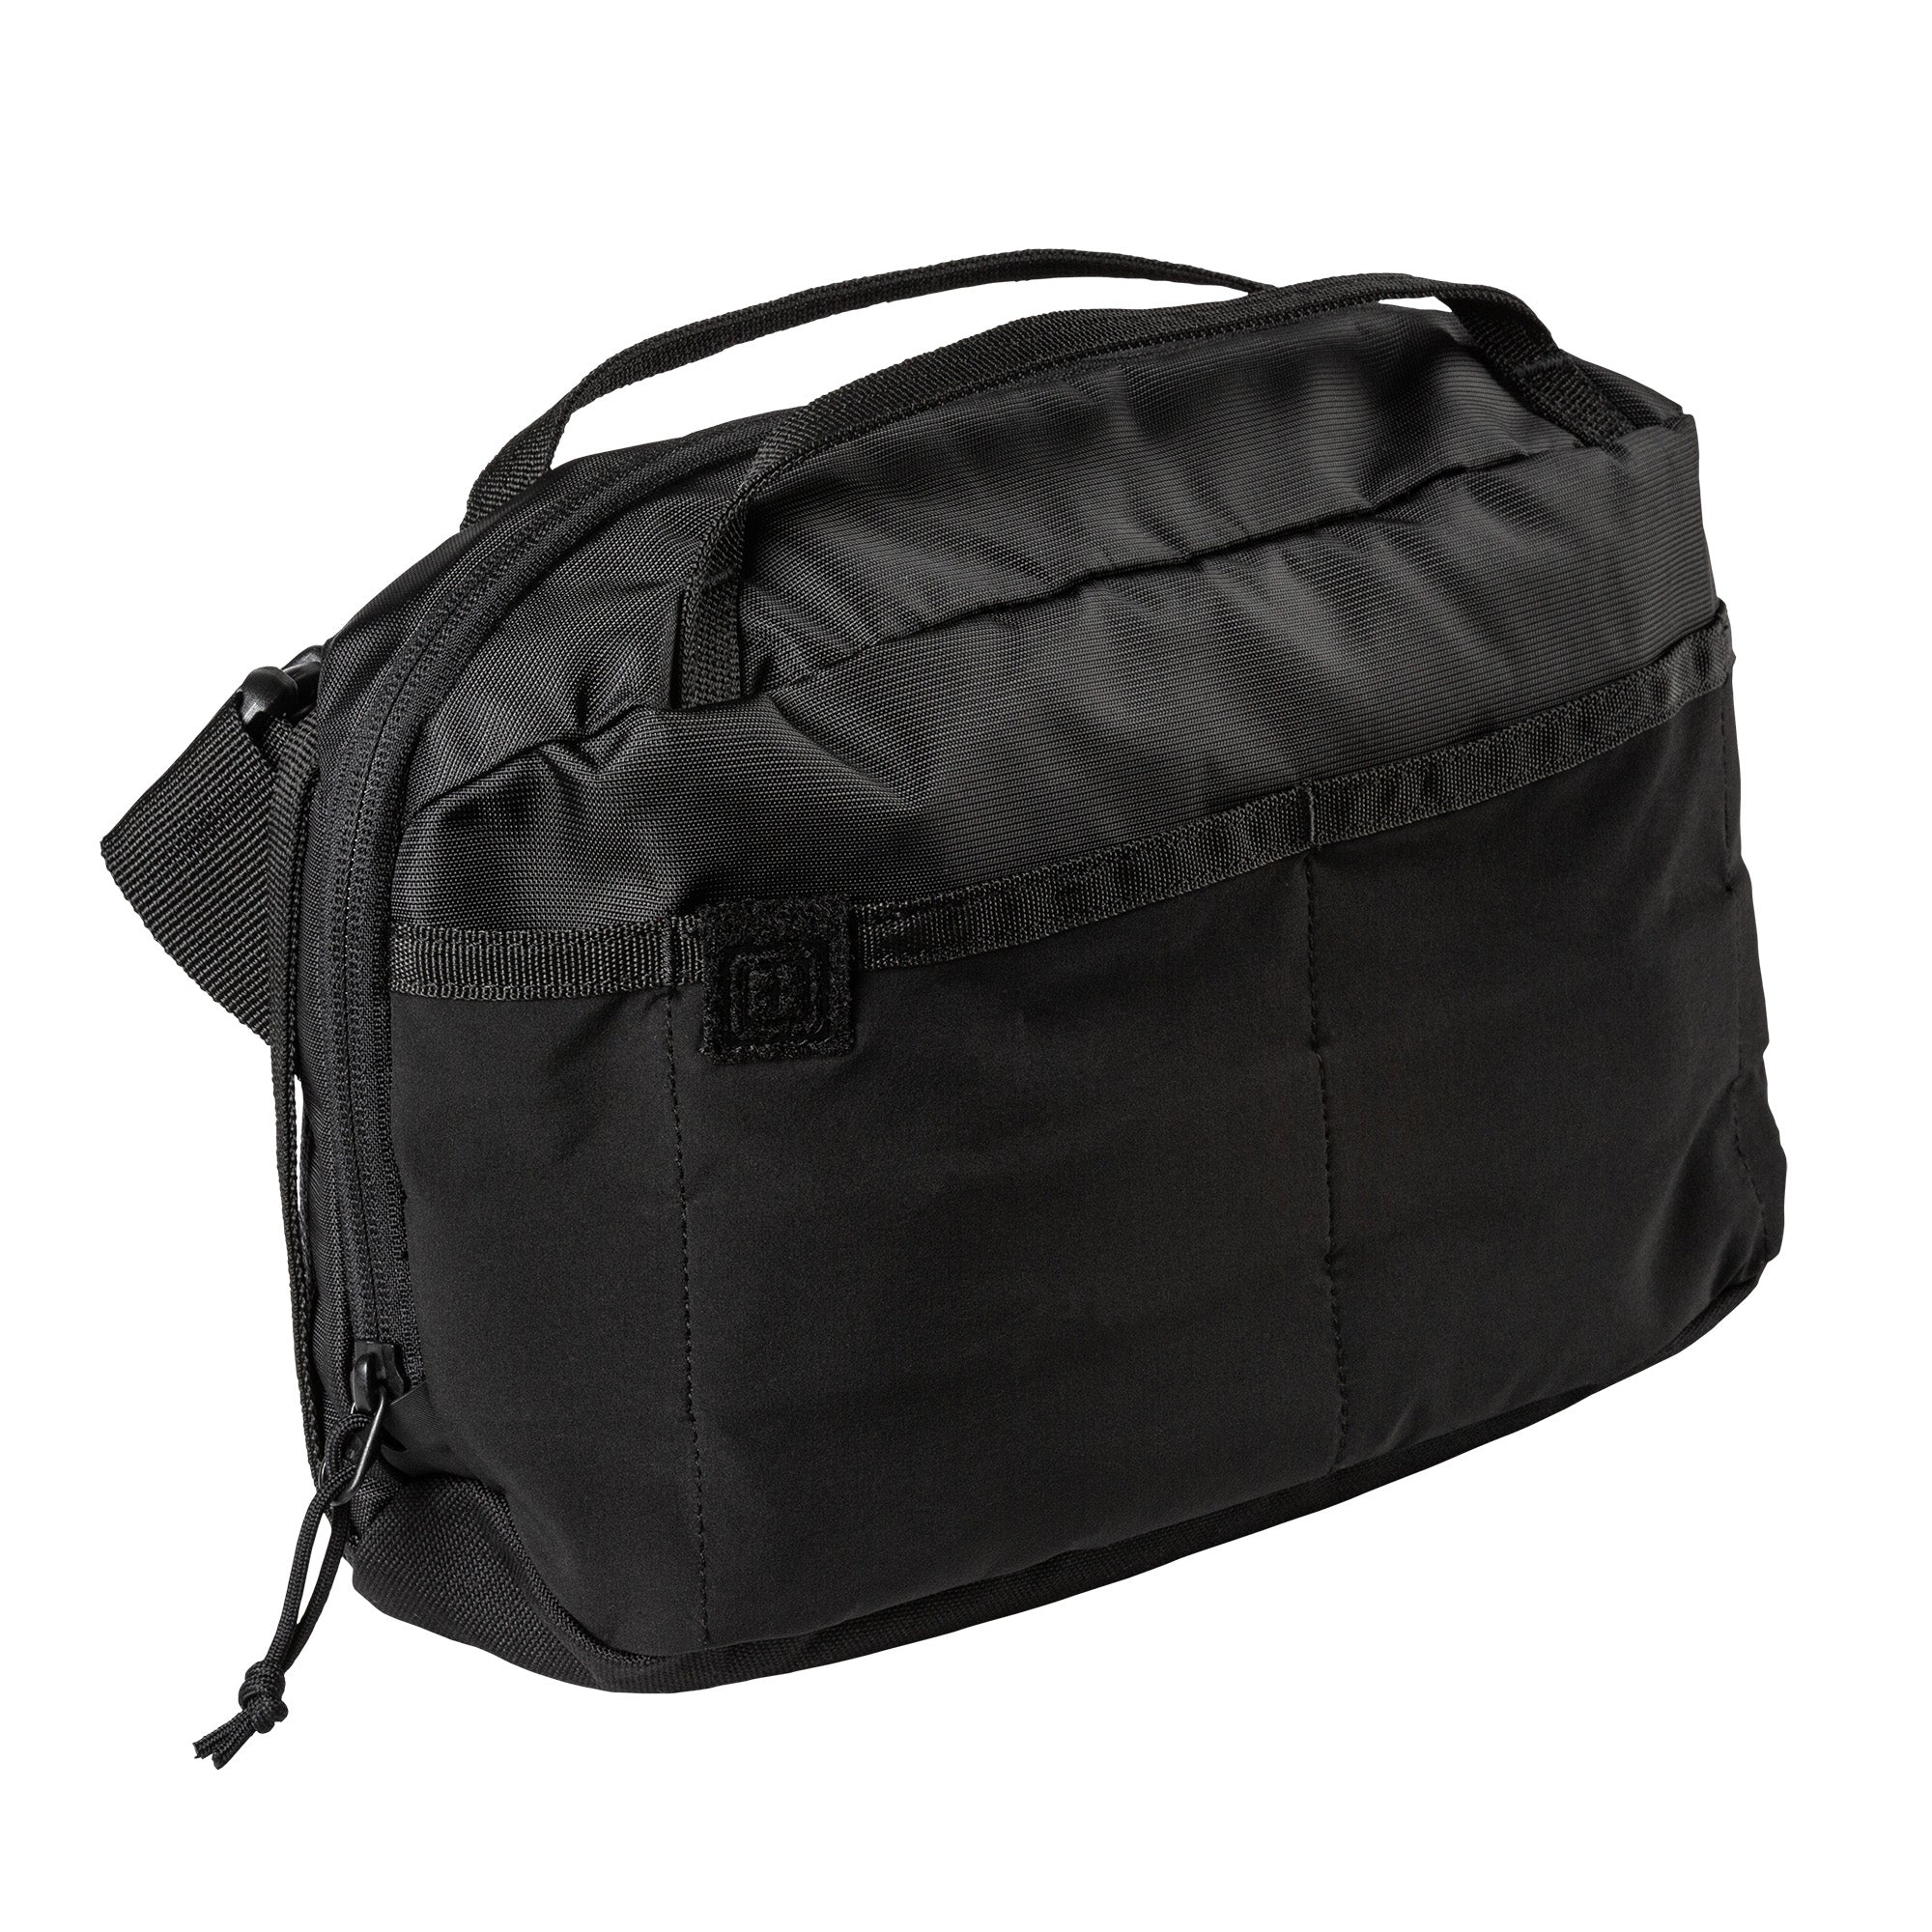 5.11 Tactical Emergency Ready Bag 6L Black Bags, Packs and Cases 5.11 Tactical Tactical Gear Supplier Tactical Distributors Australia